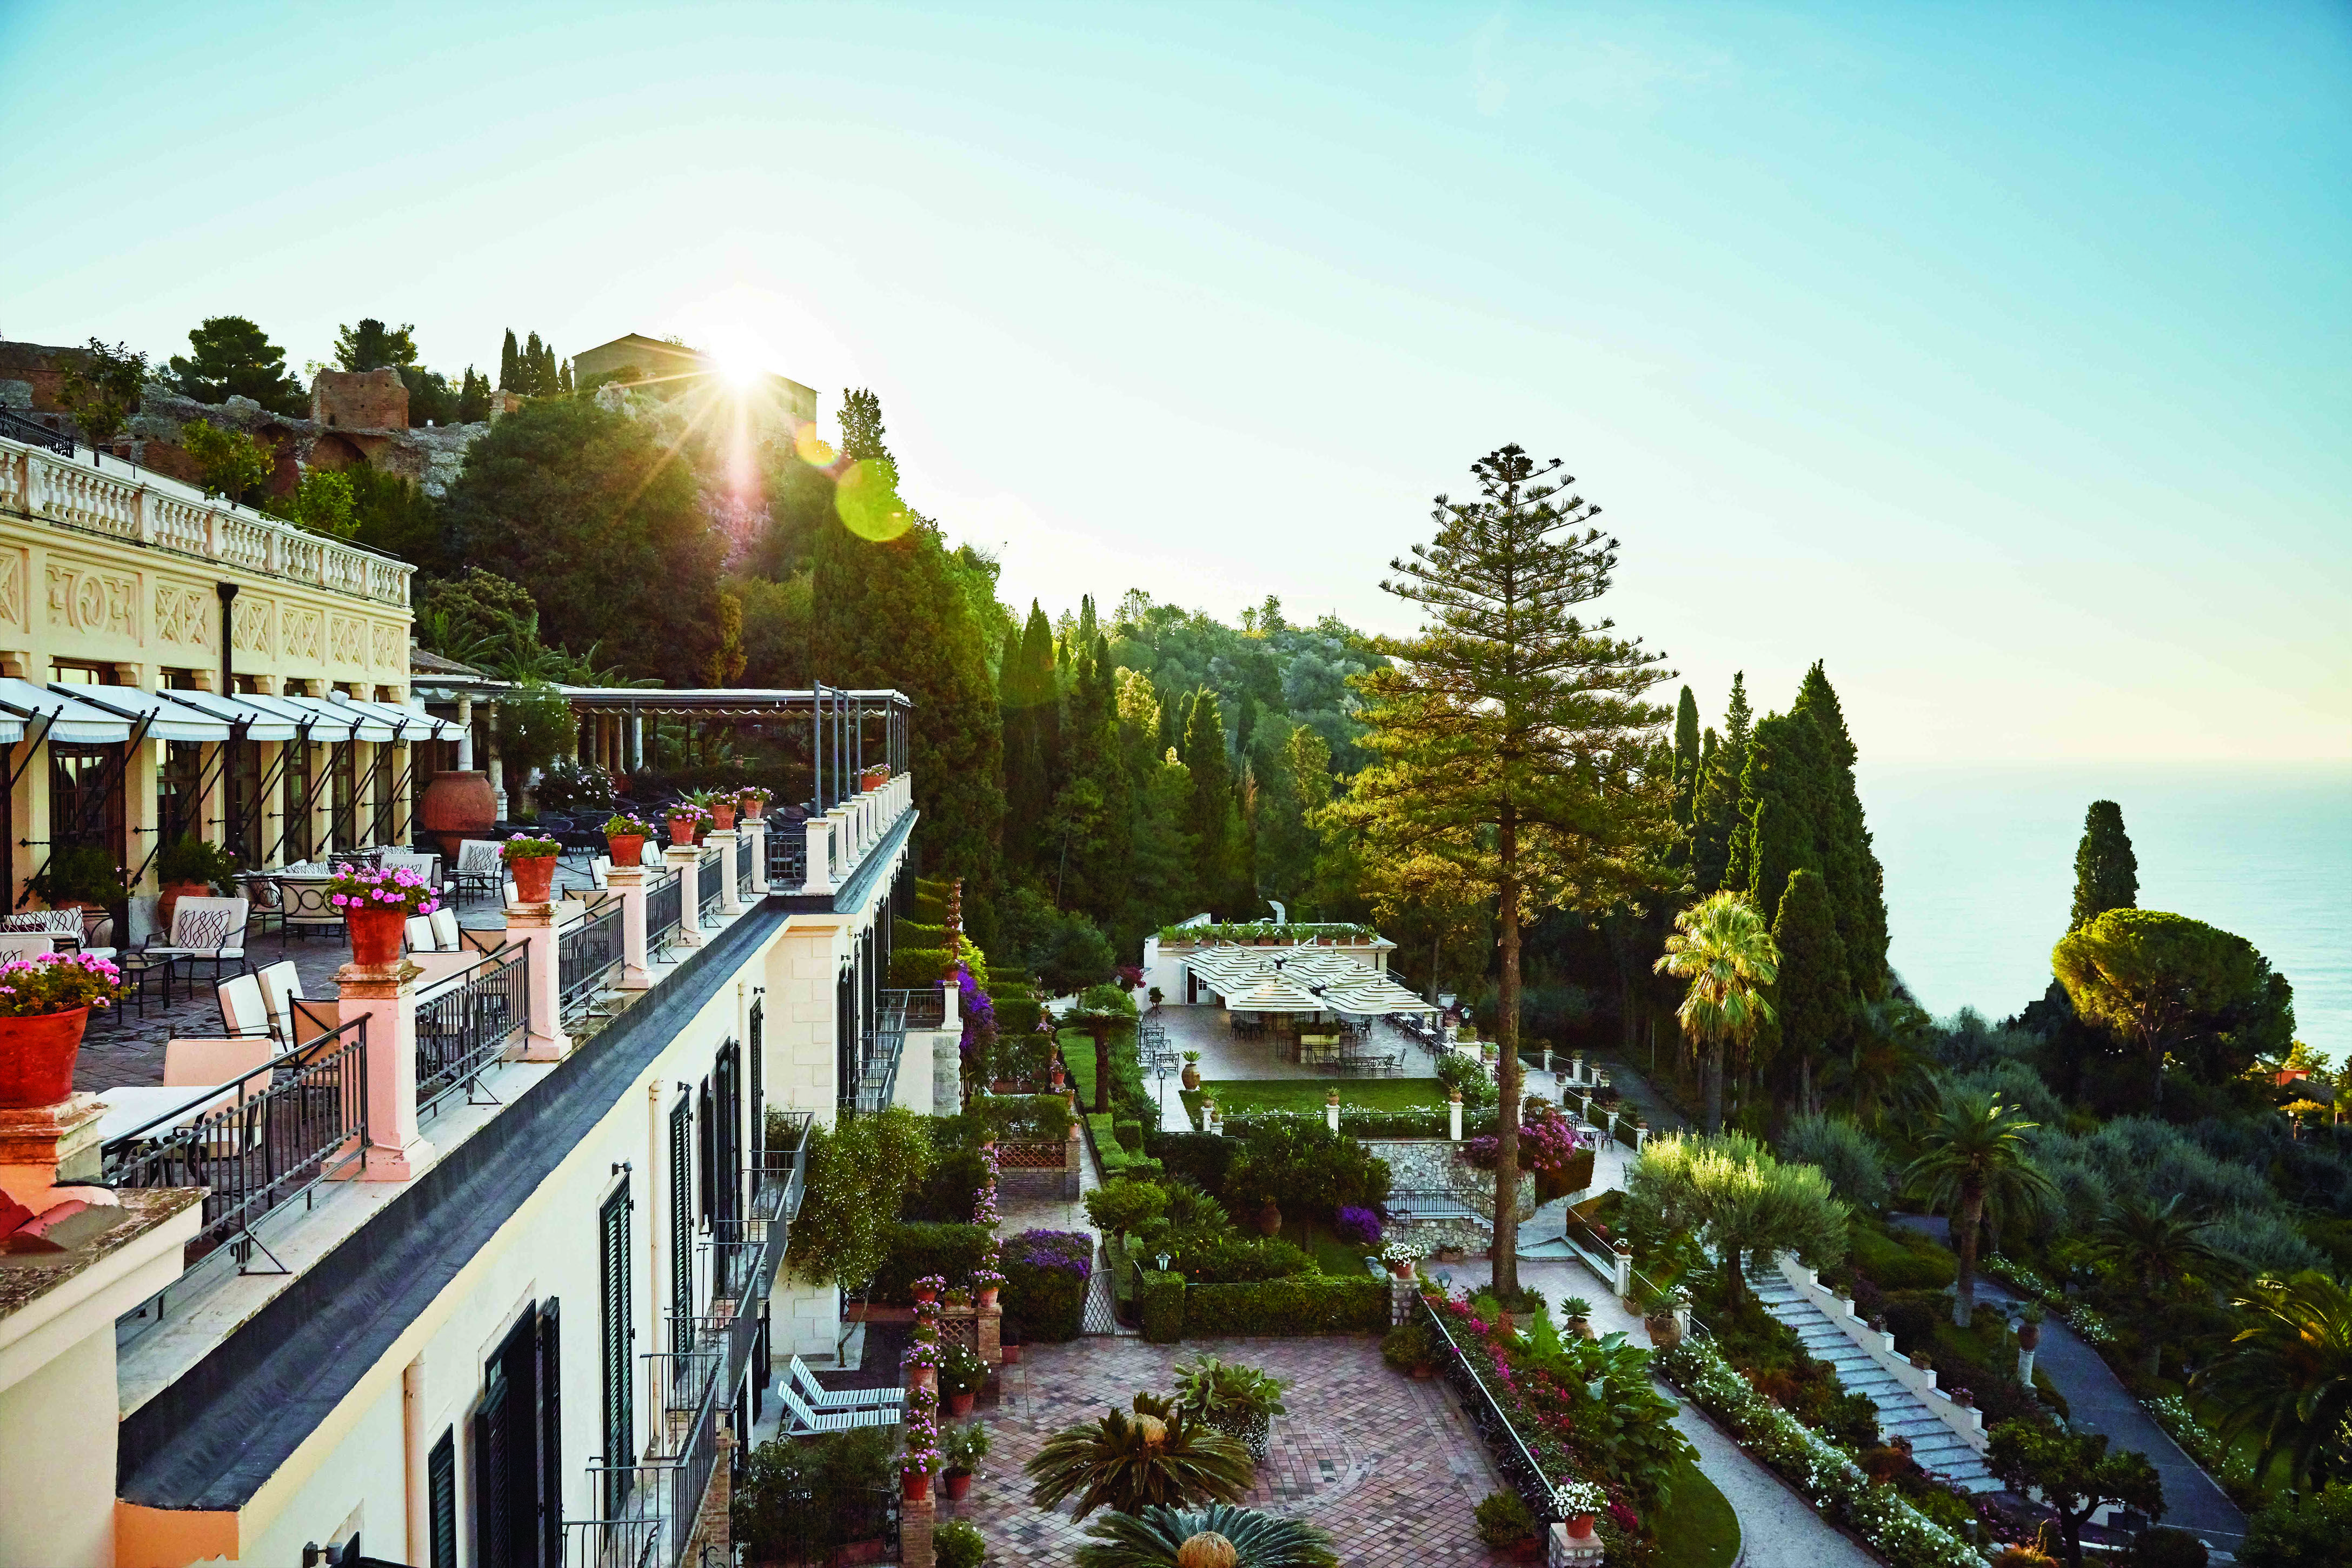 Belmond Hotel Splendido Portofino, Italy - Compass + Twine